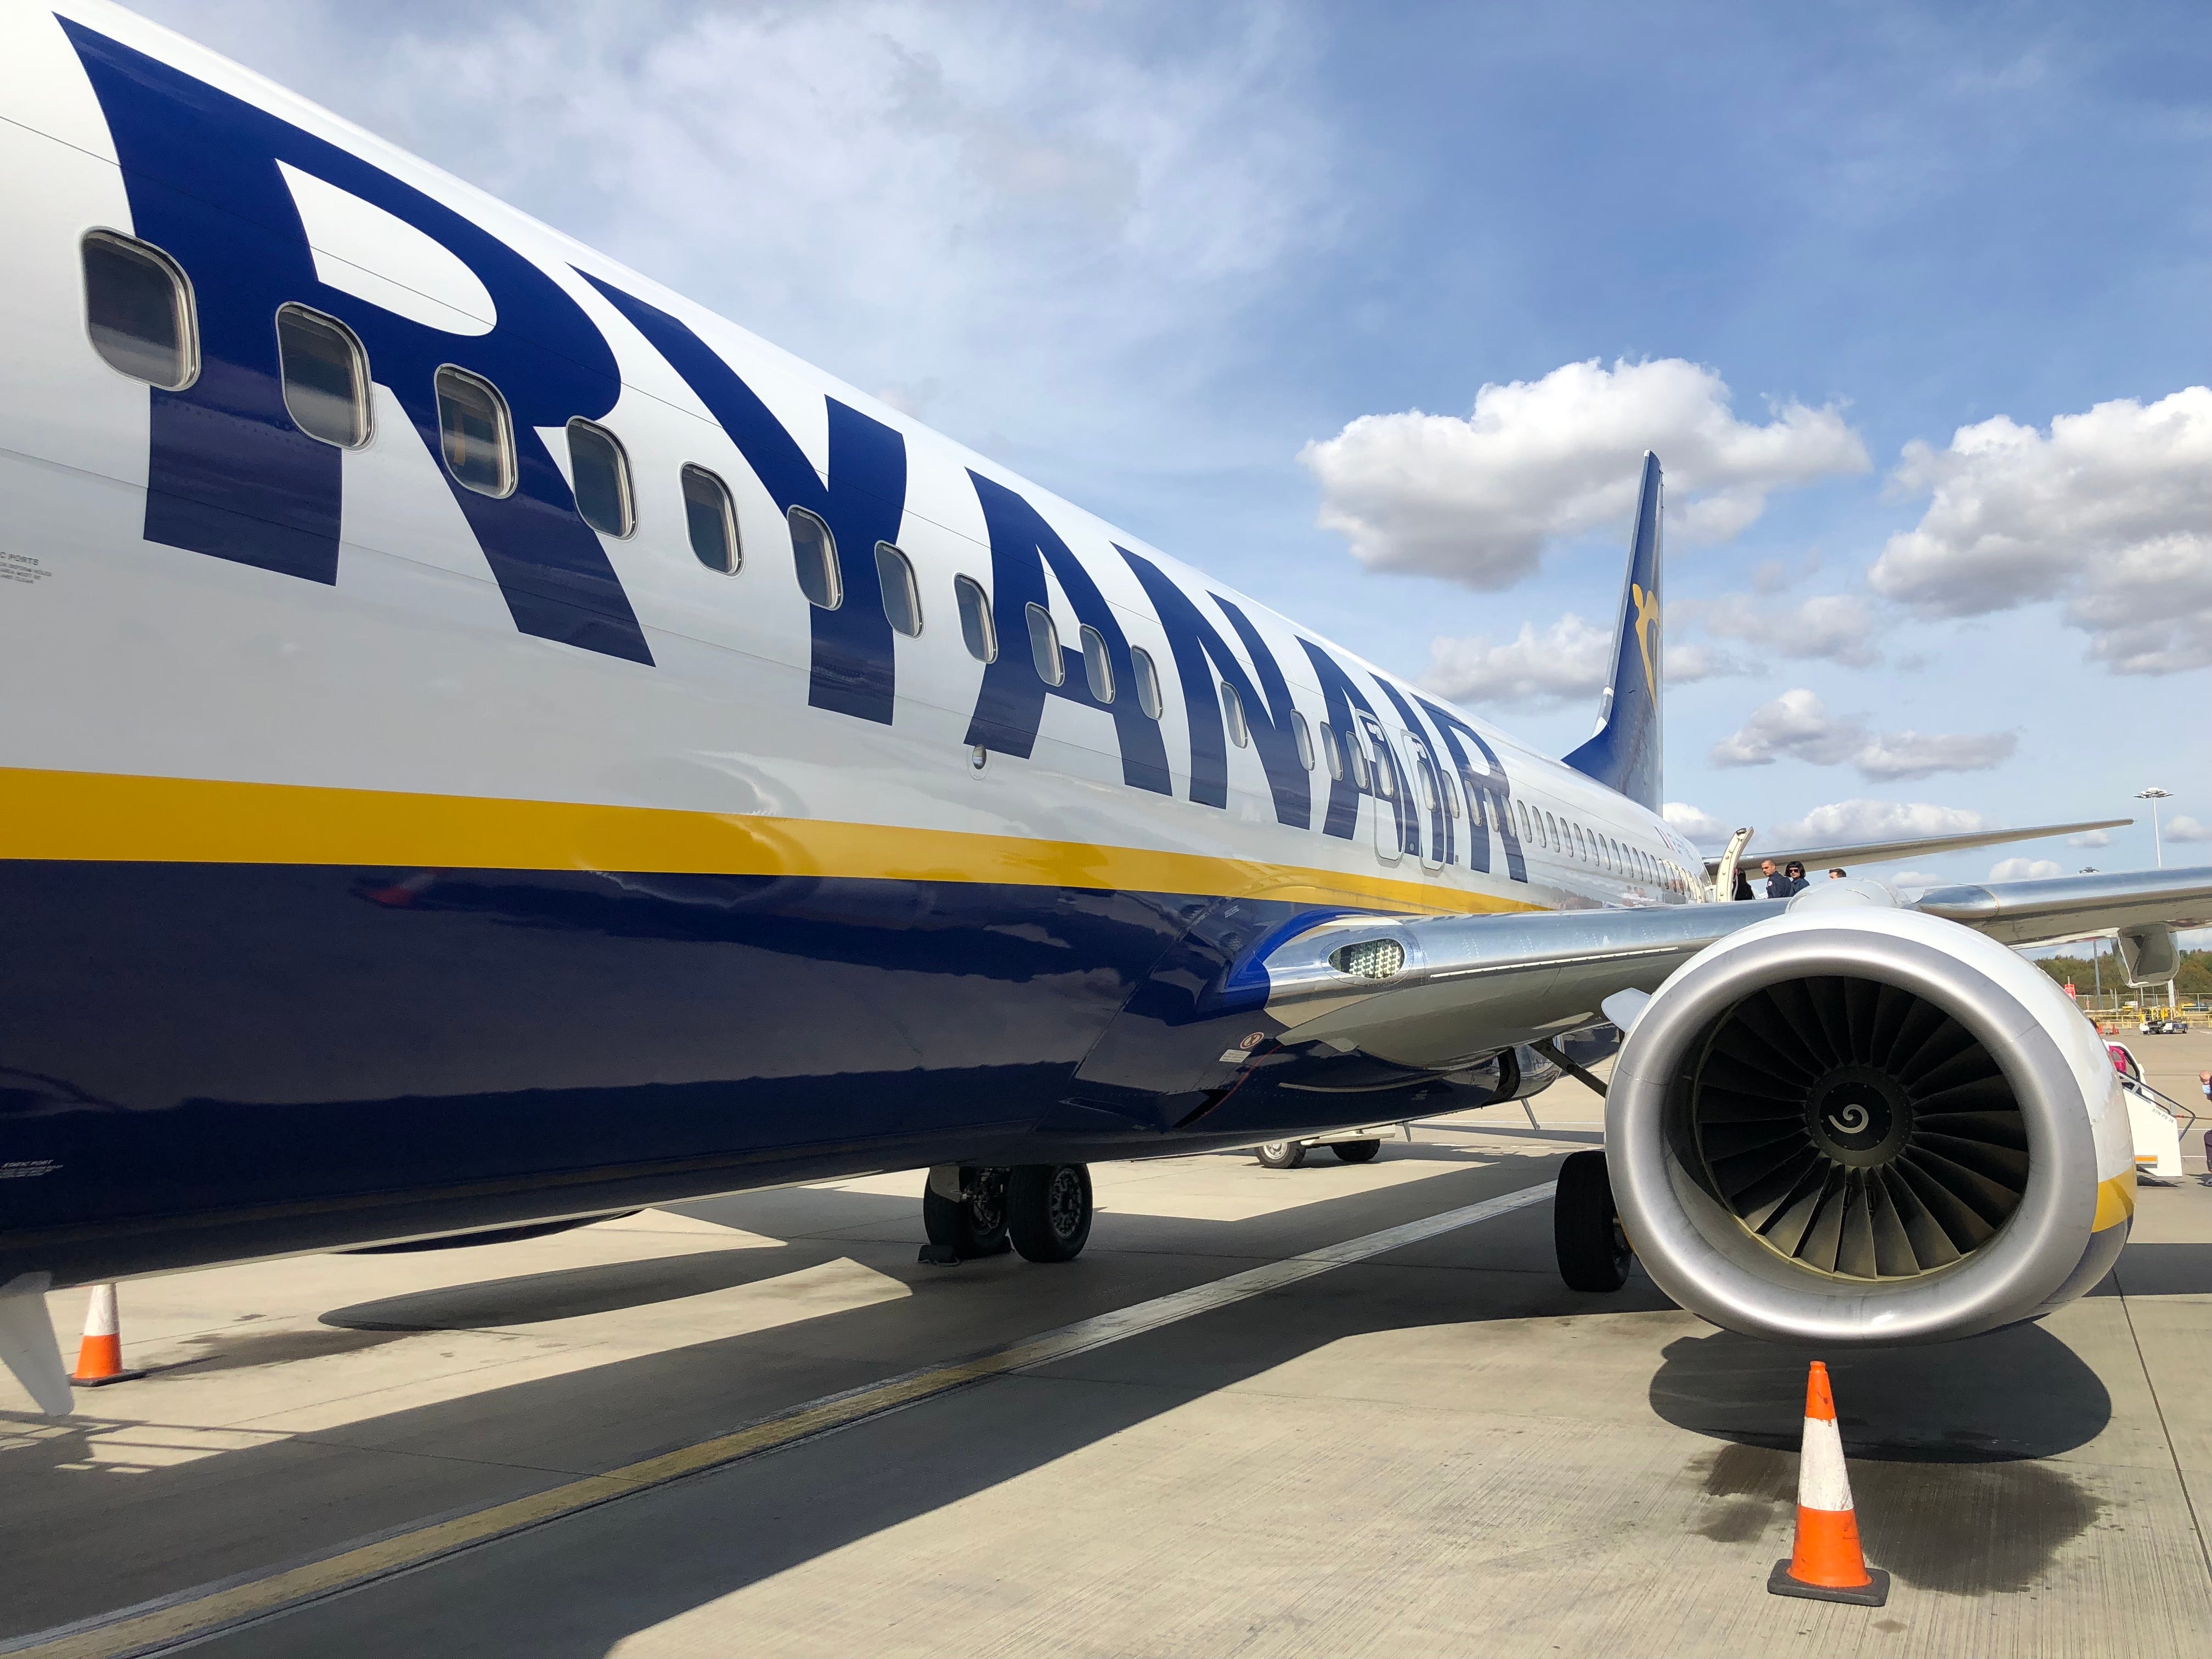 A passenger became violent onboard a Ryanair flight